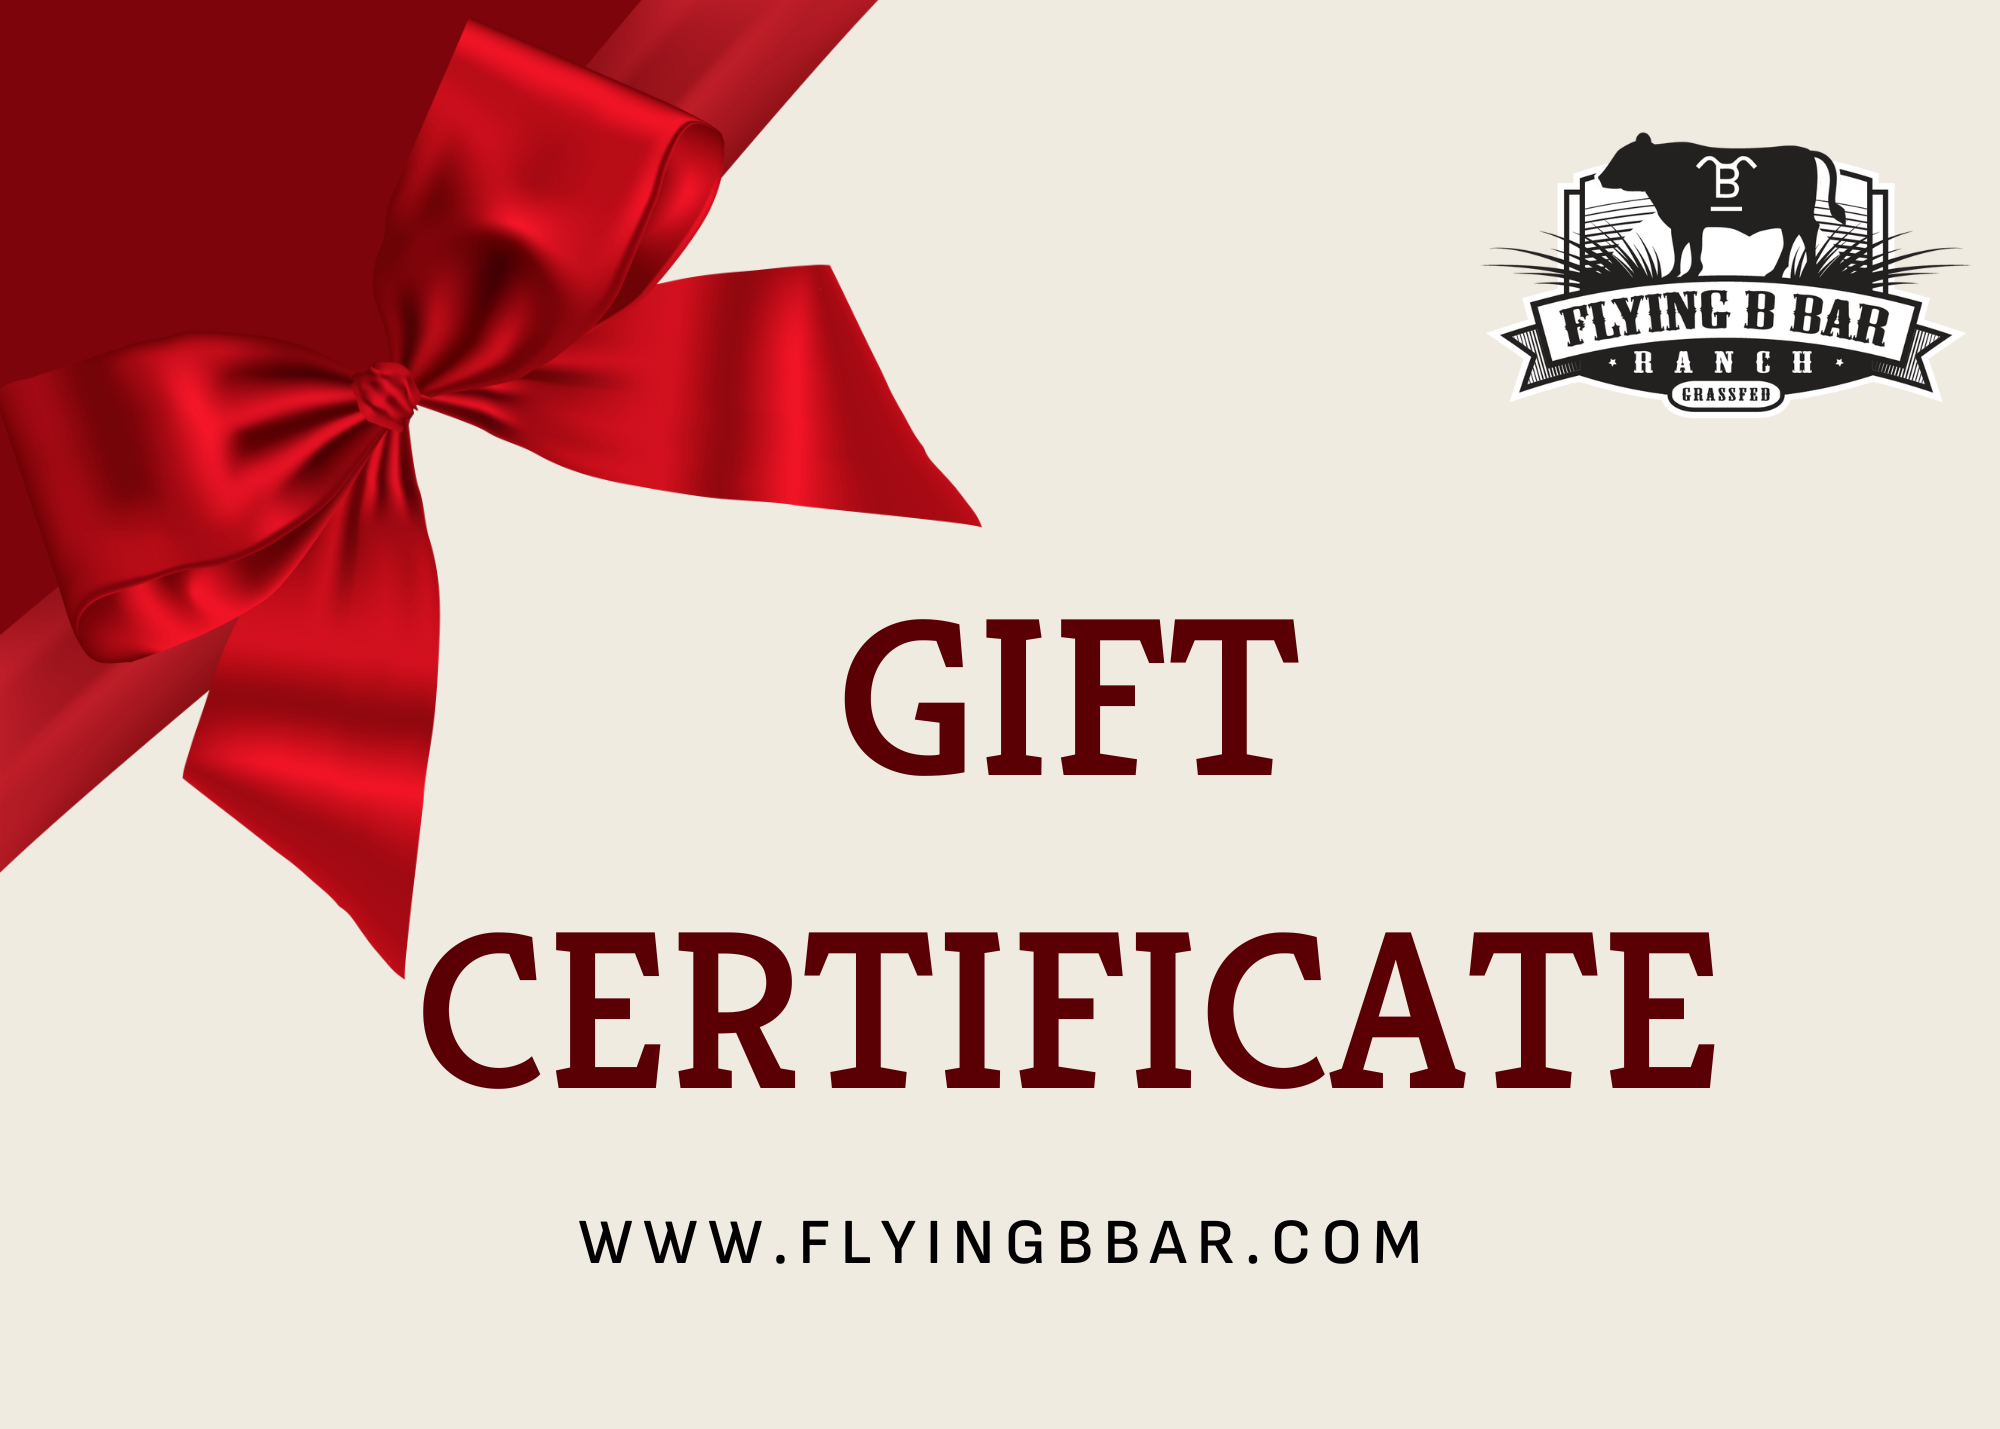 Flying B Bar Ranch Gift Certificate